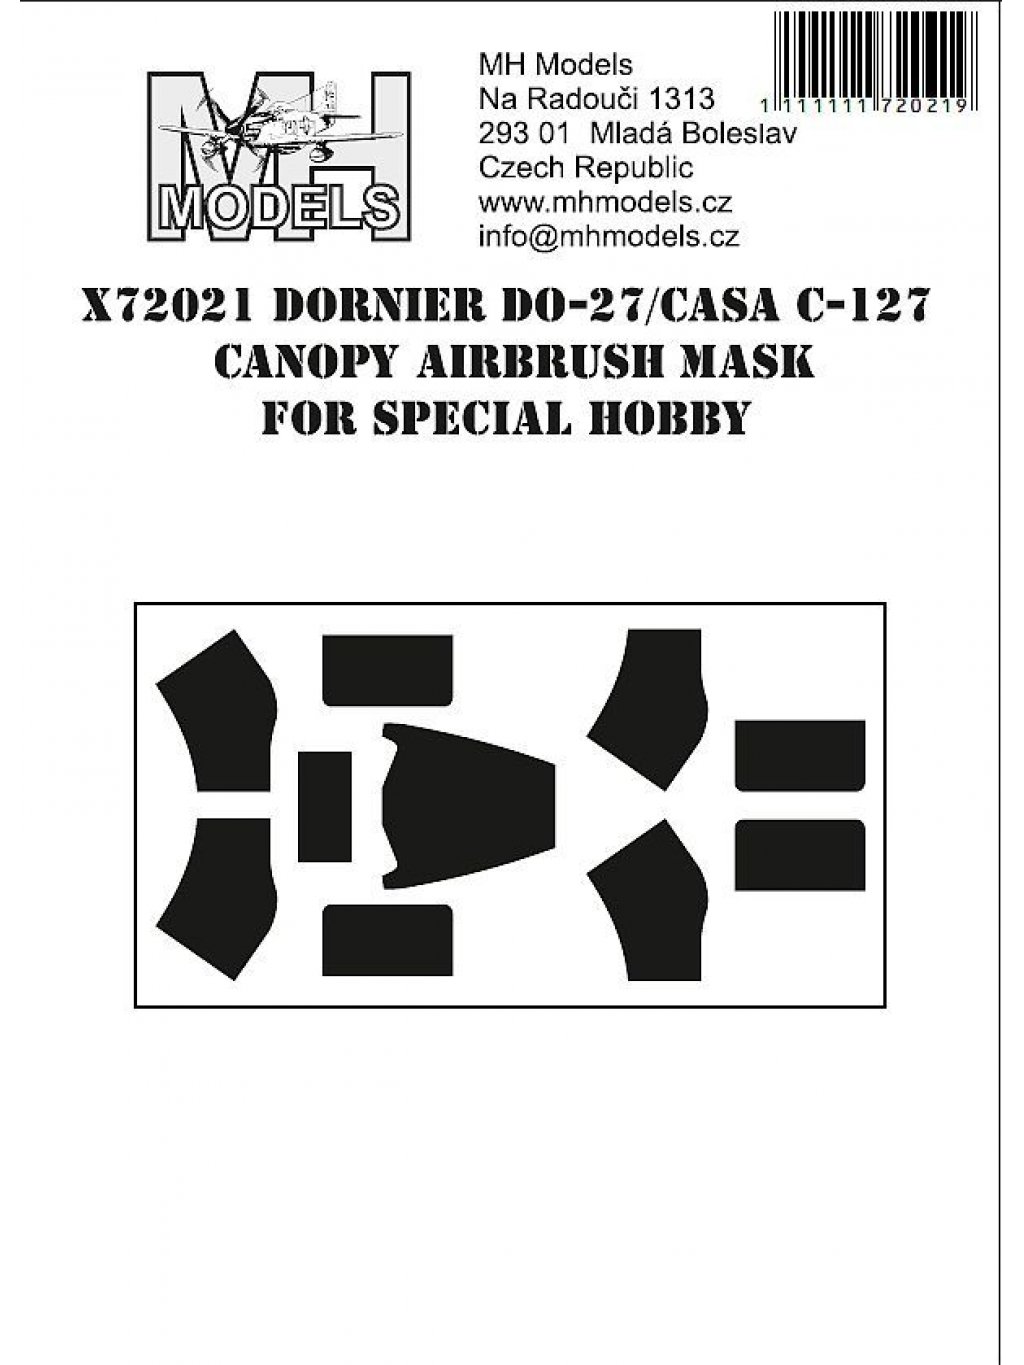 Dornier Do-27/ CASA C-127 canopy airbrush mask for Special Hobby